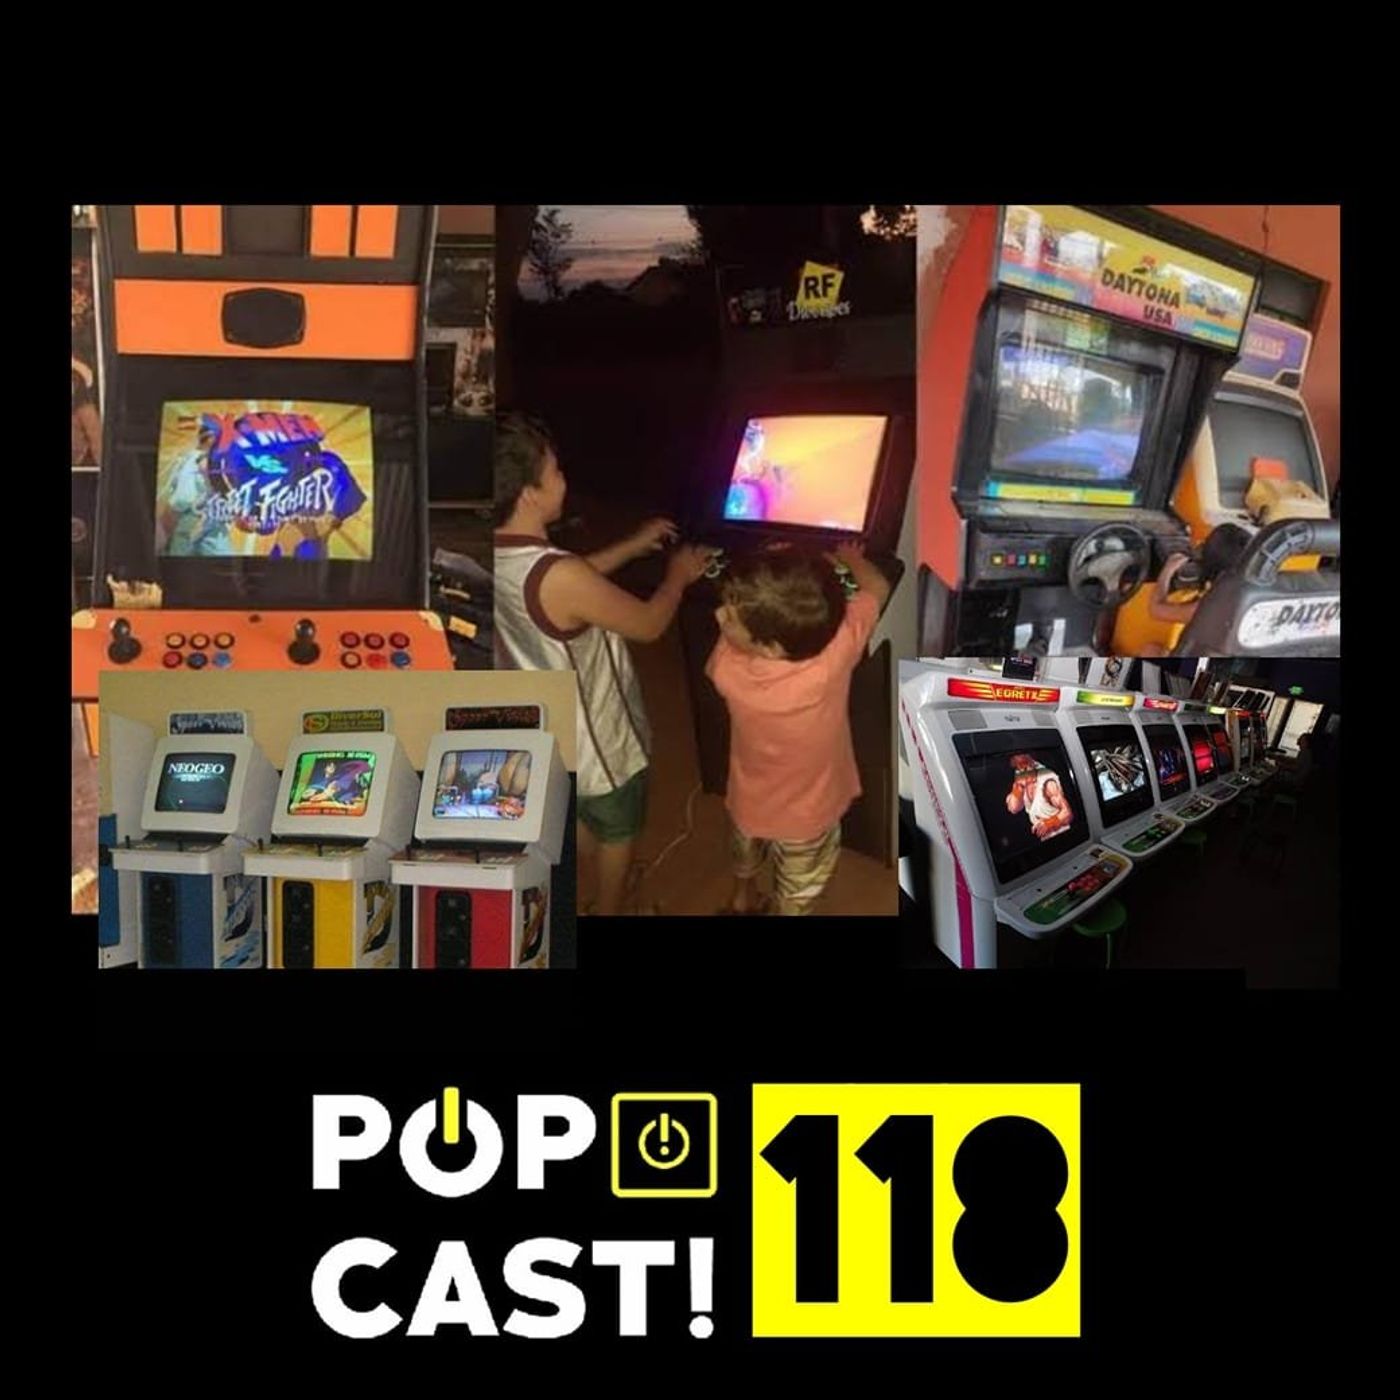 Pópcast! #118 - Papo de boteco da época dos Arcades